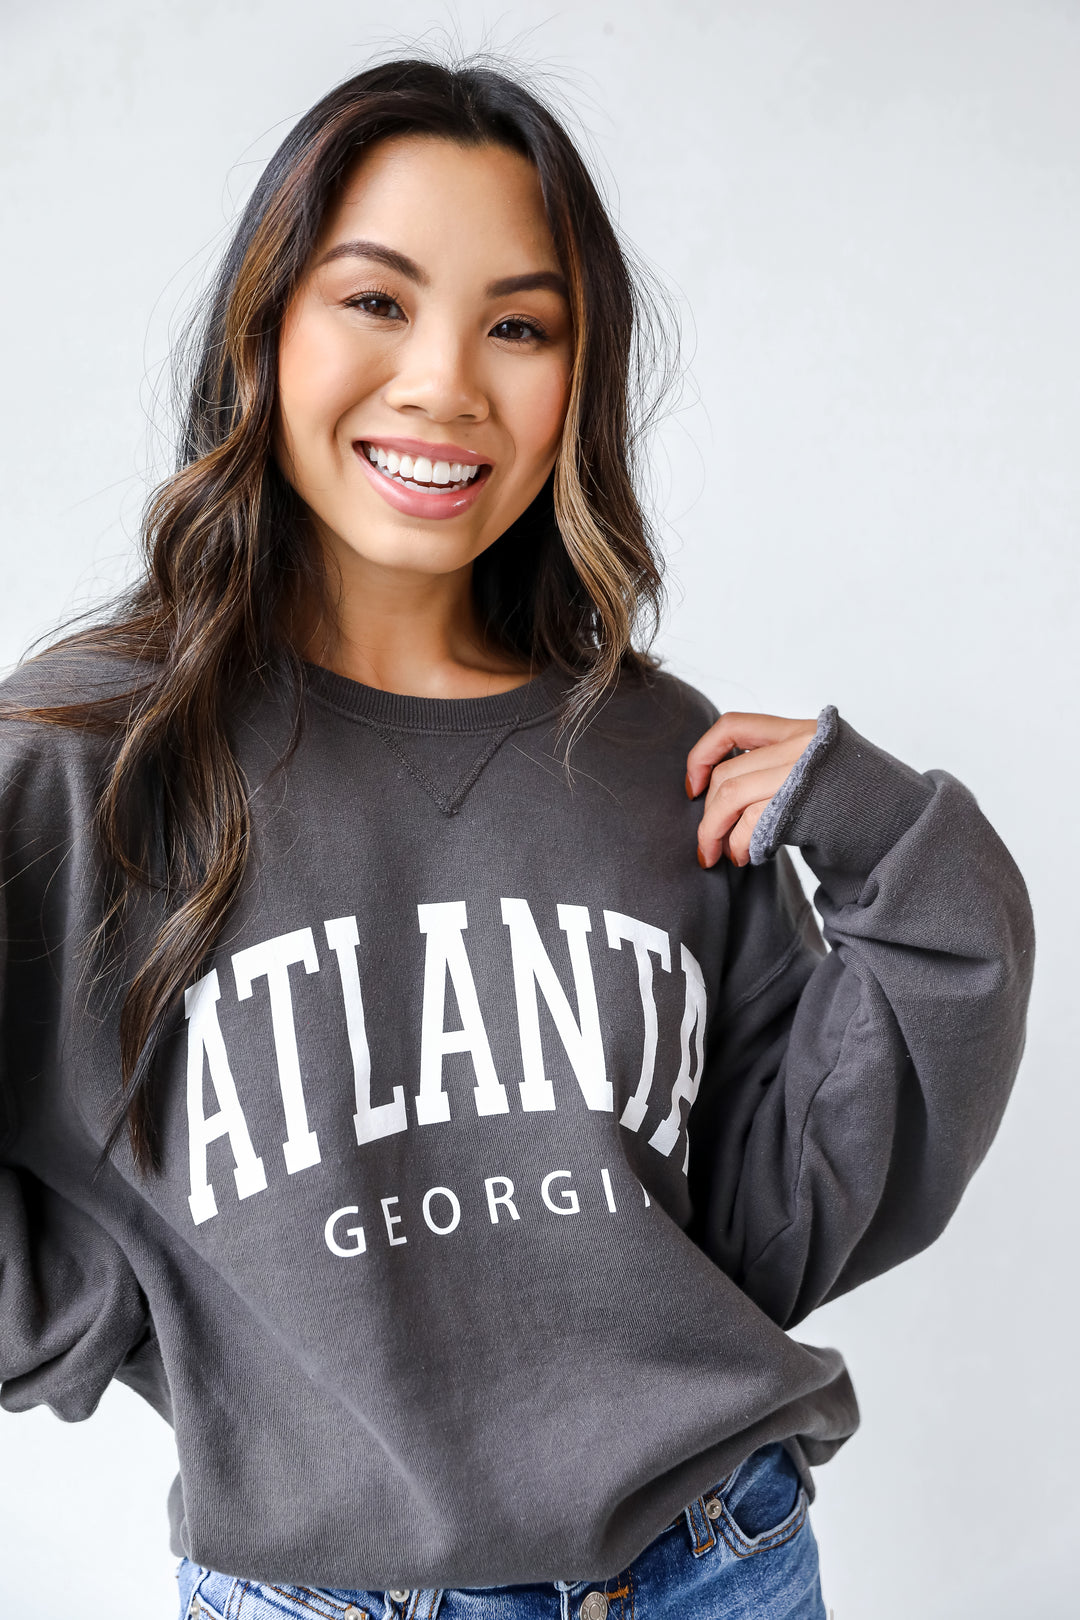 Atlanta Georgia Sweatshirt, Game Day Sweatshirt, Oversized Comfy Sweatshirt, Graphic Sweatshirt